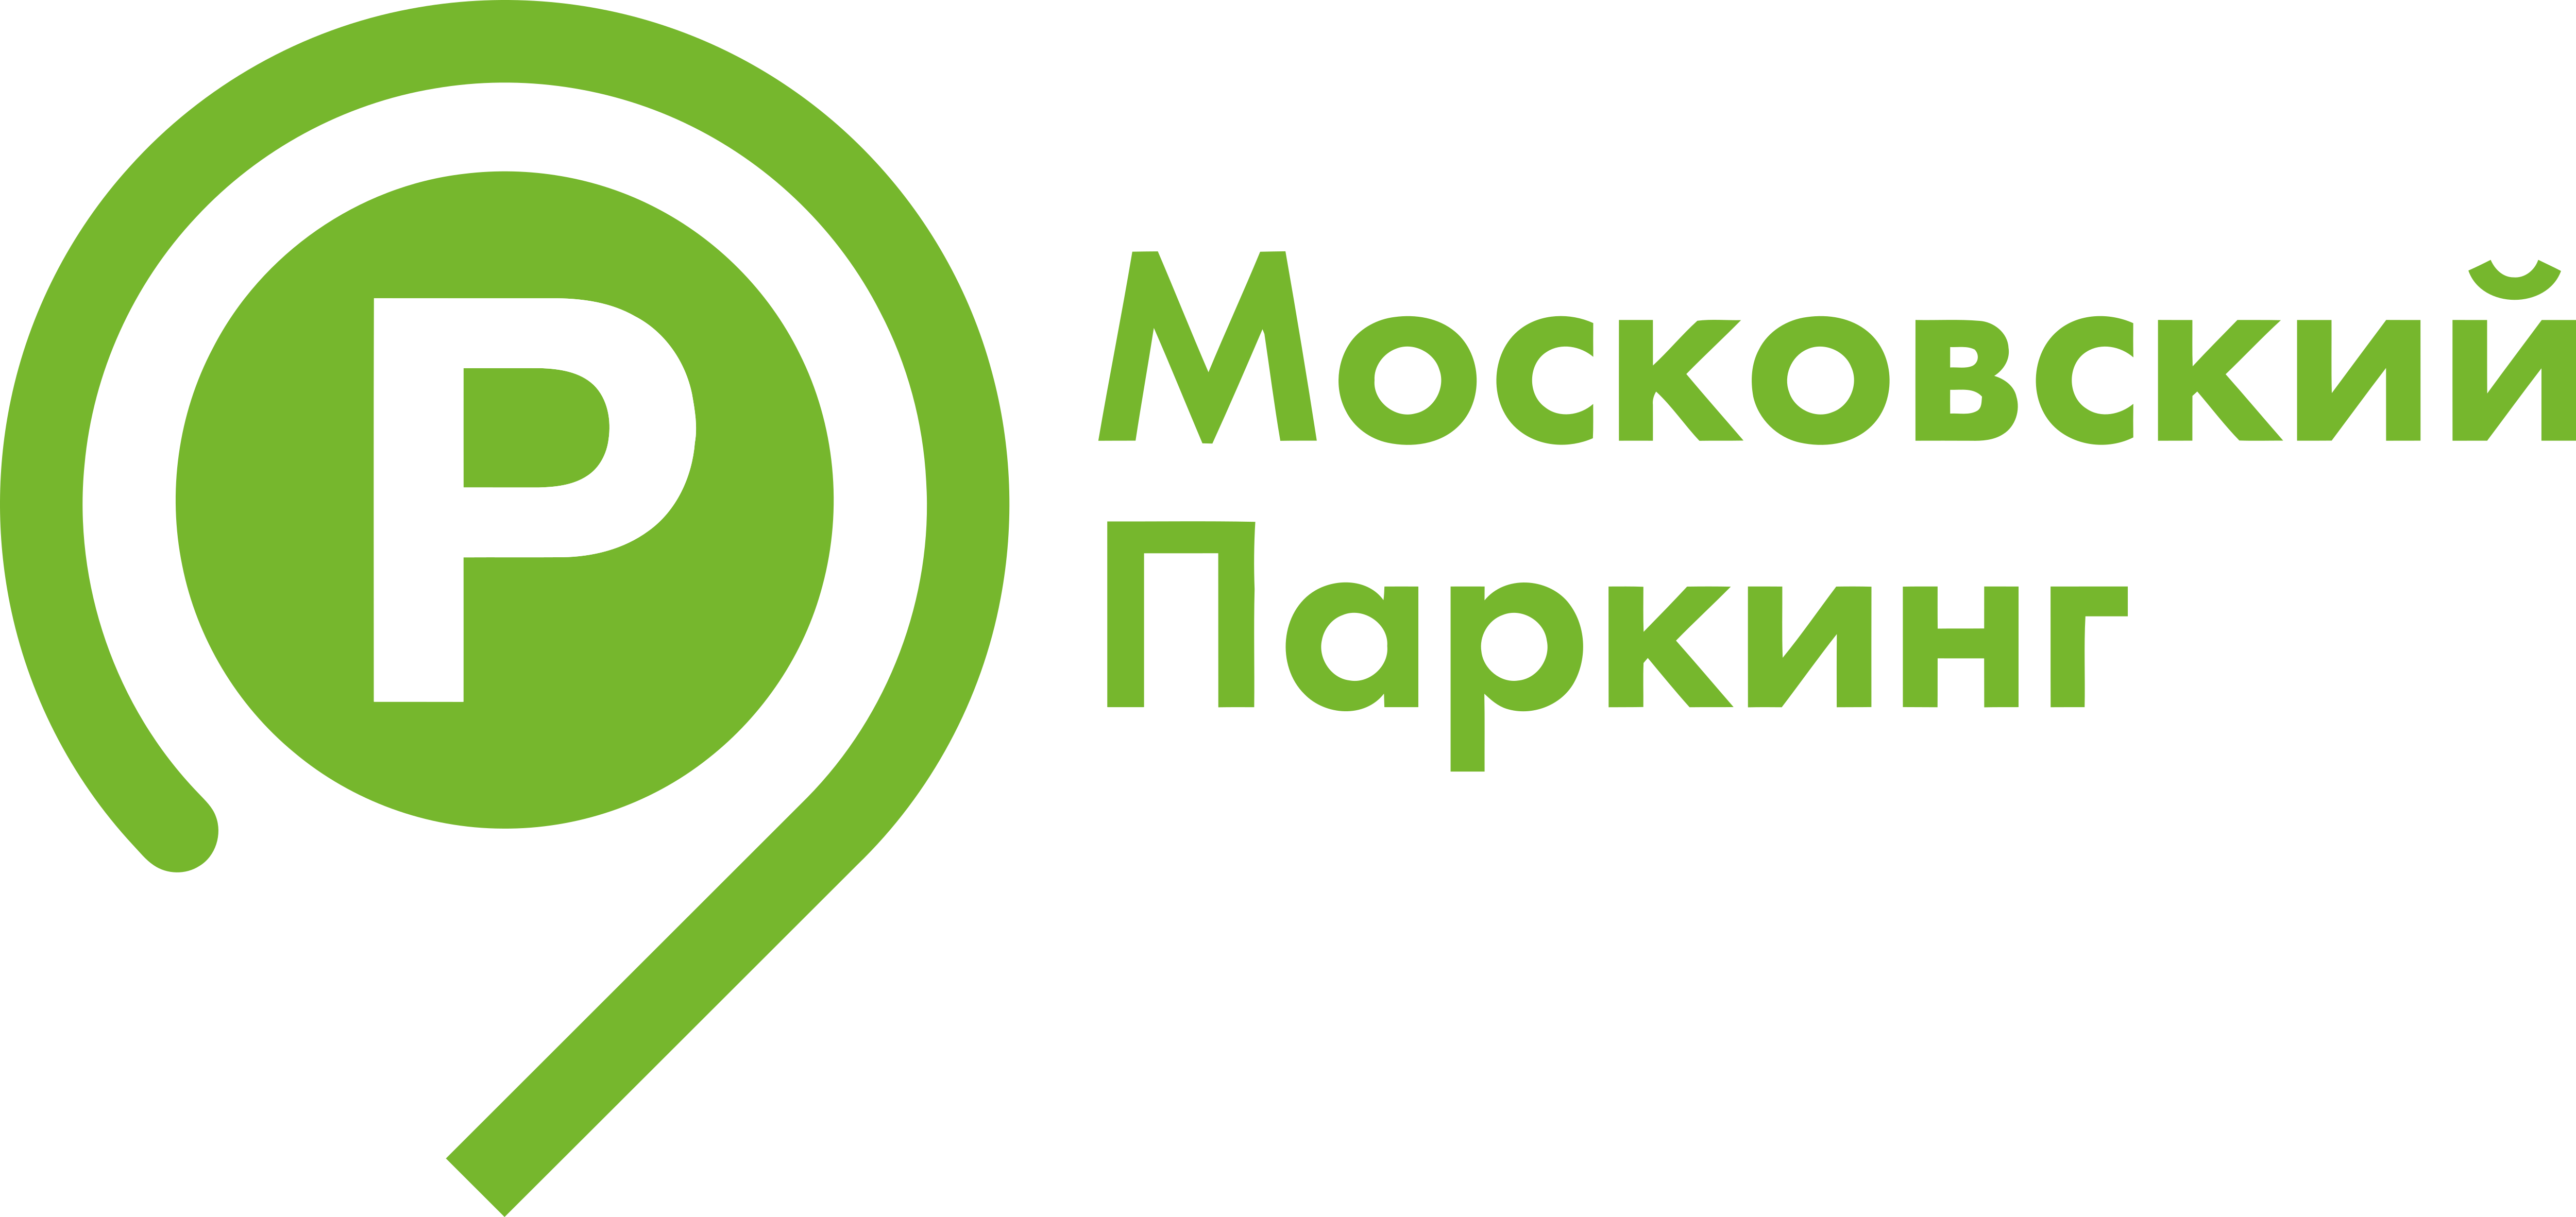 Московский паркинг. АМПП логотип. Моспаркинг логотип. Московские парковки логотип.